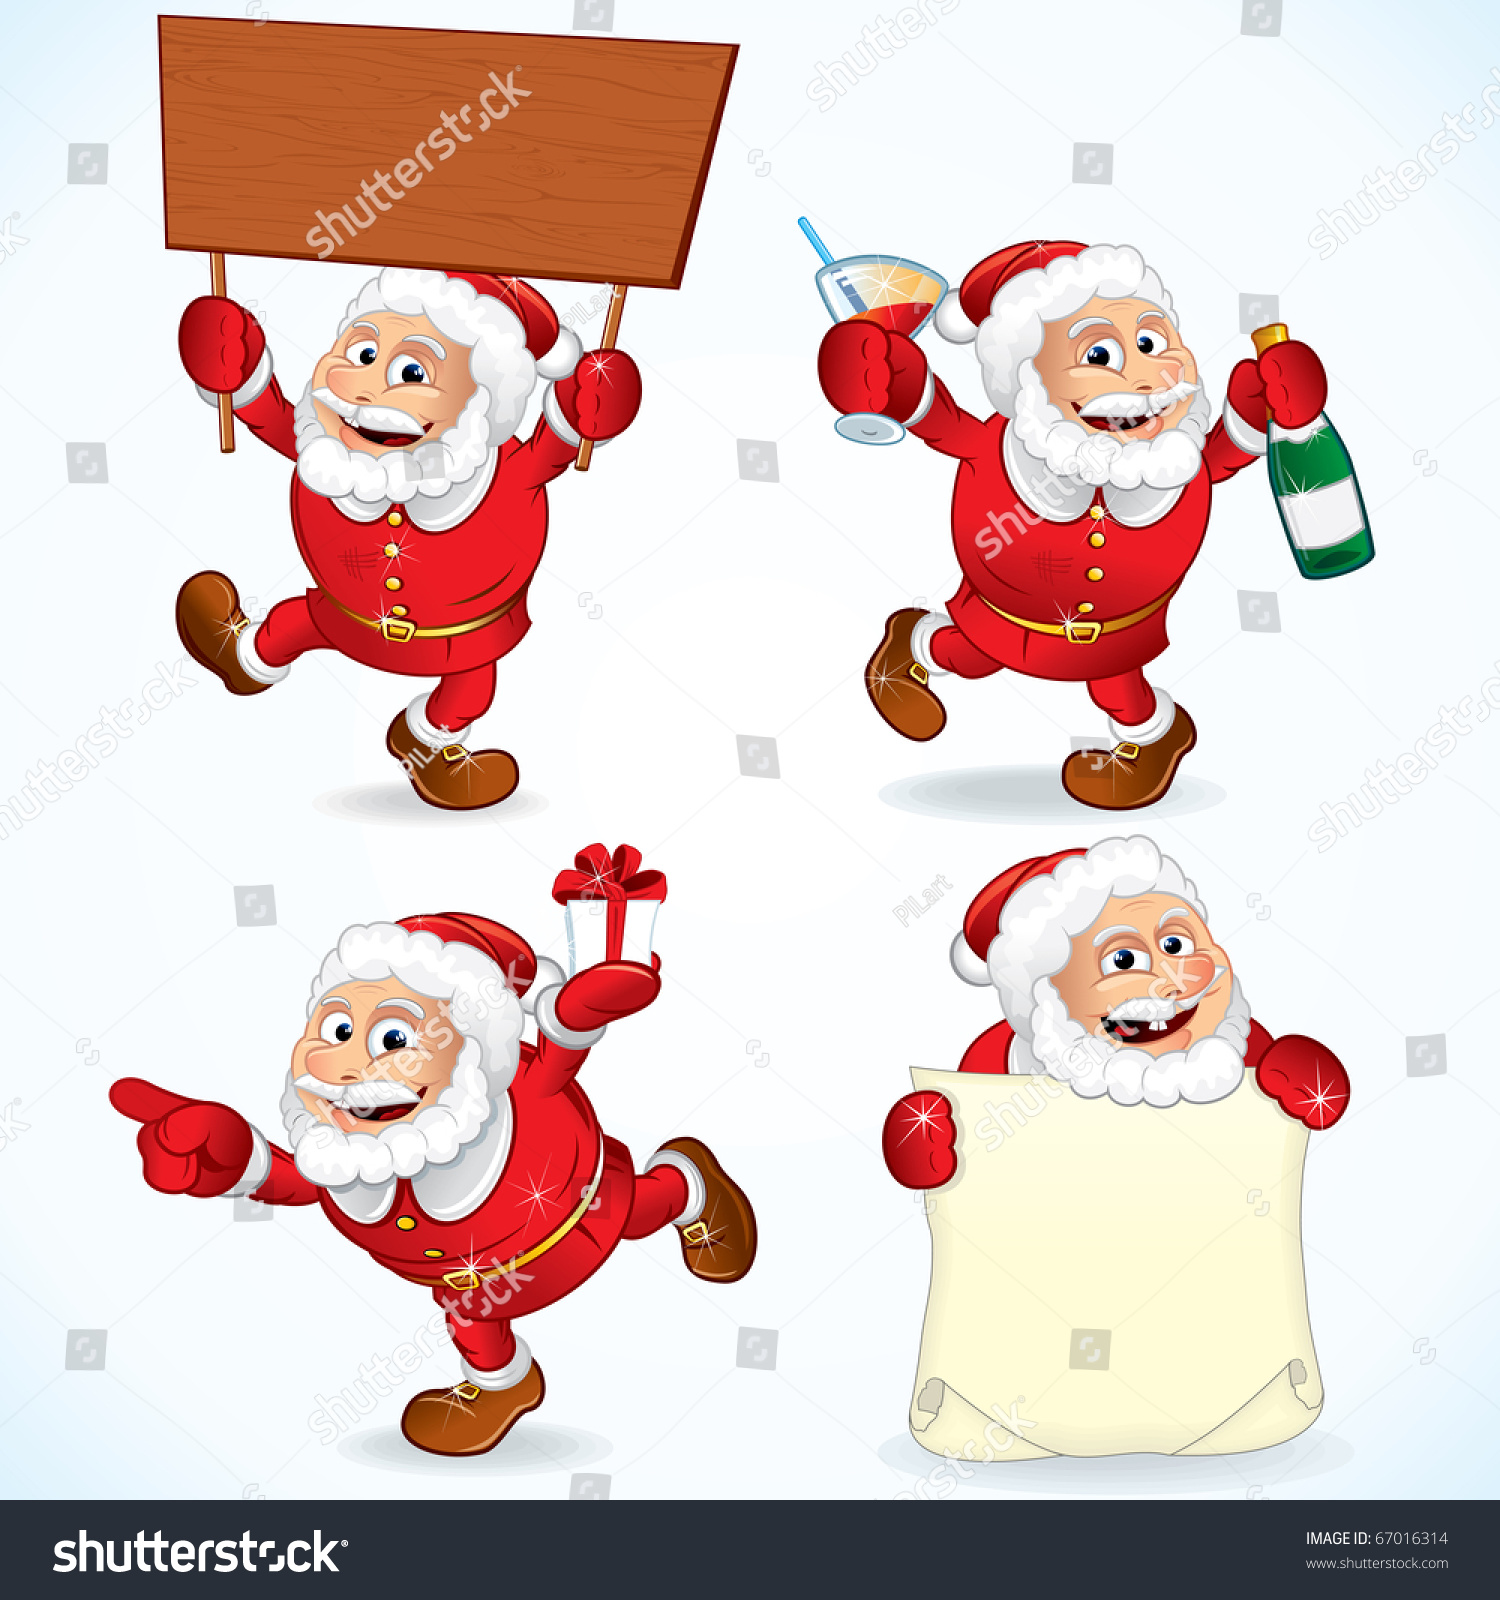 Funny Cartoon Santa Claus Illustrations Set Santa